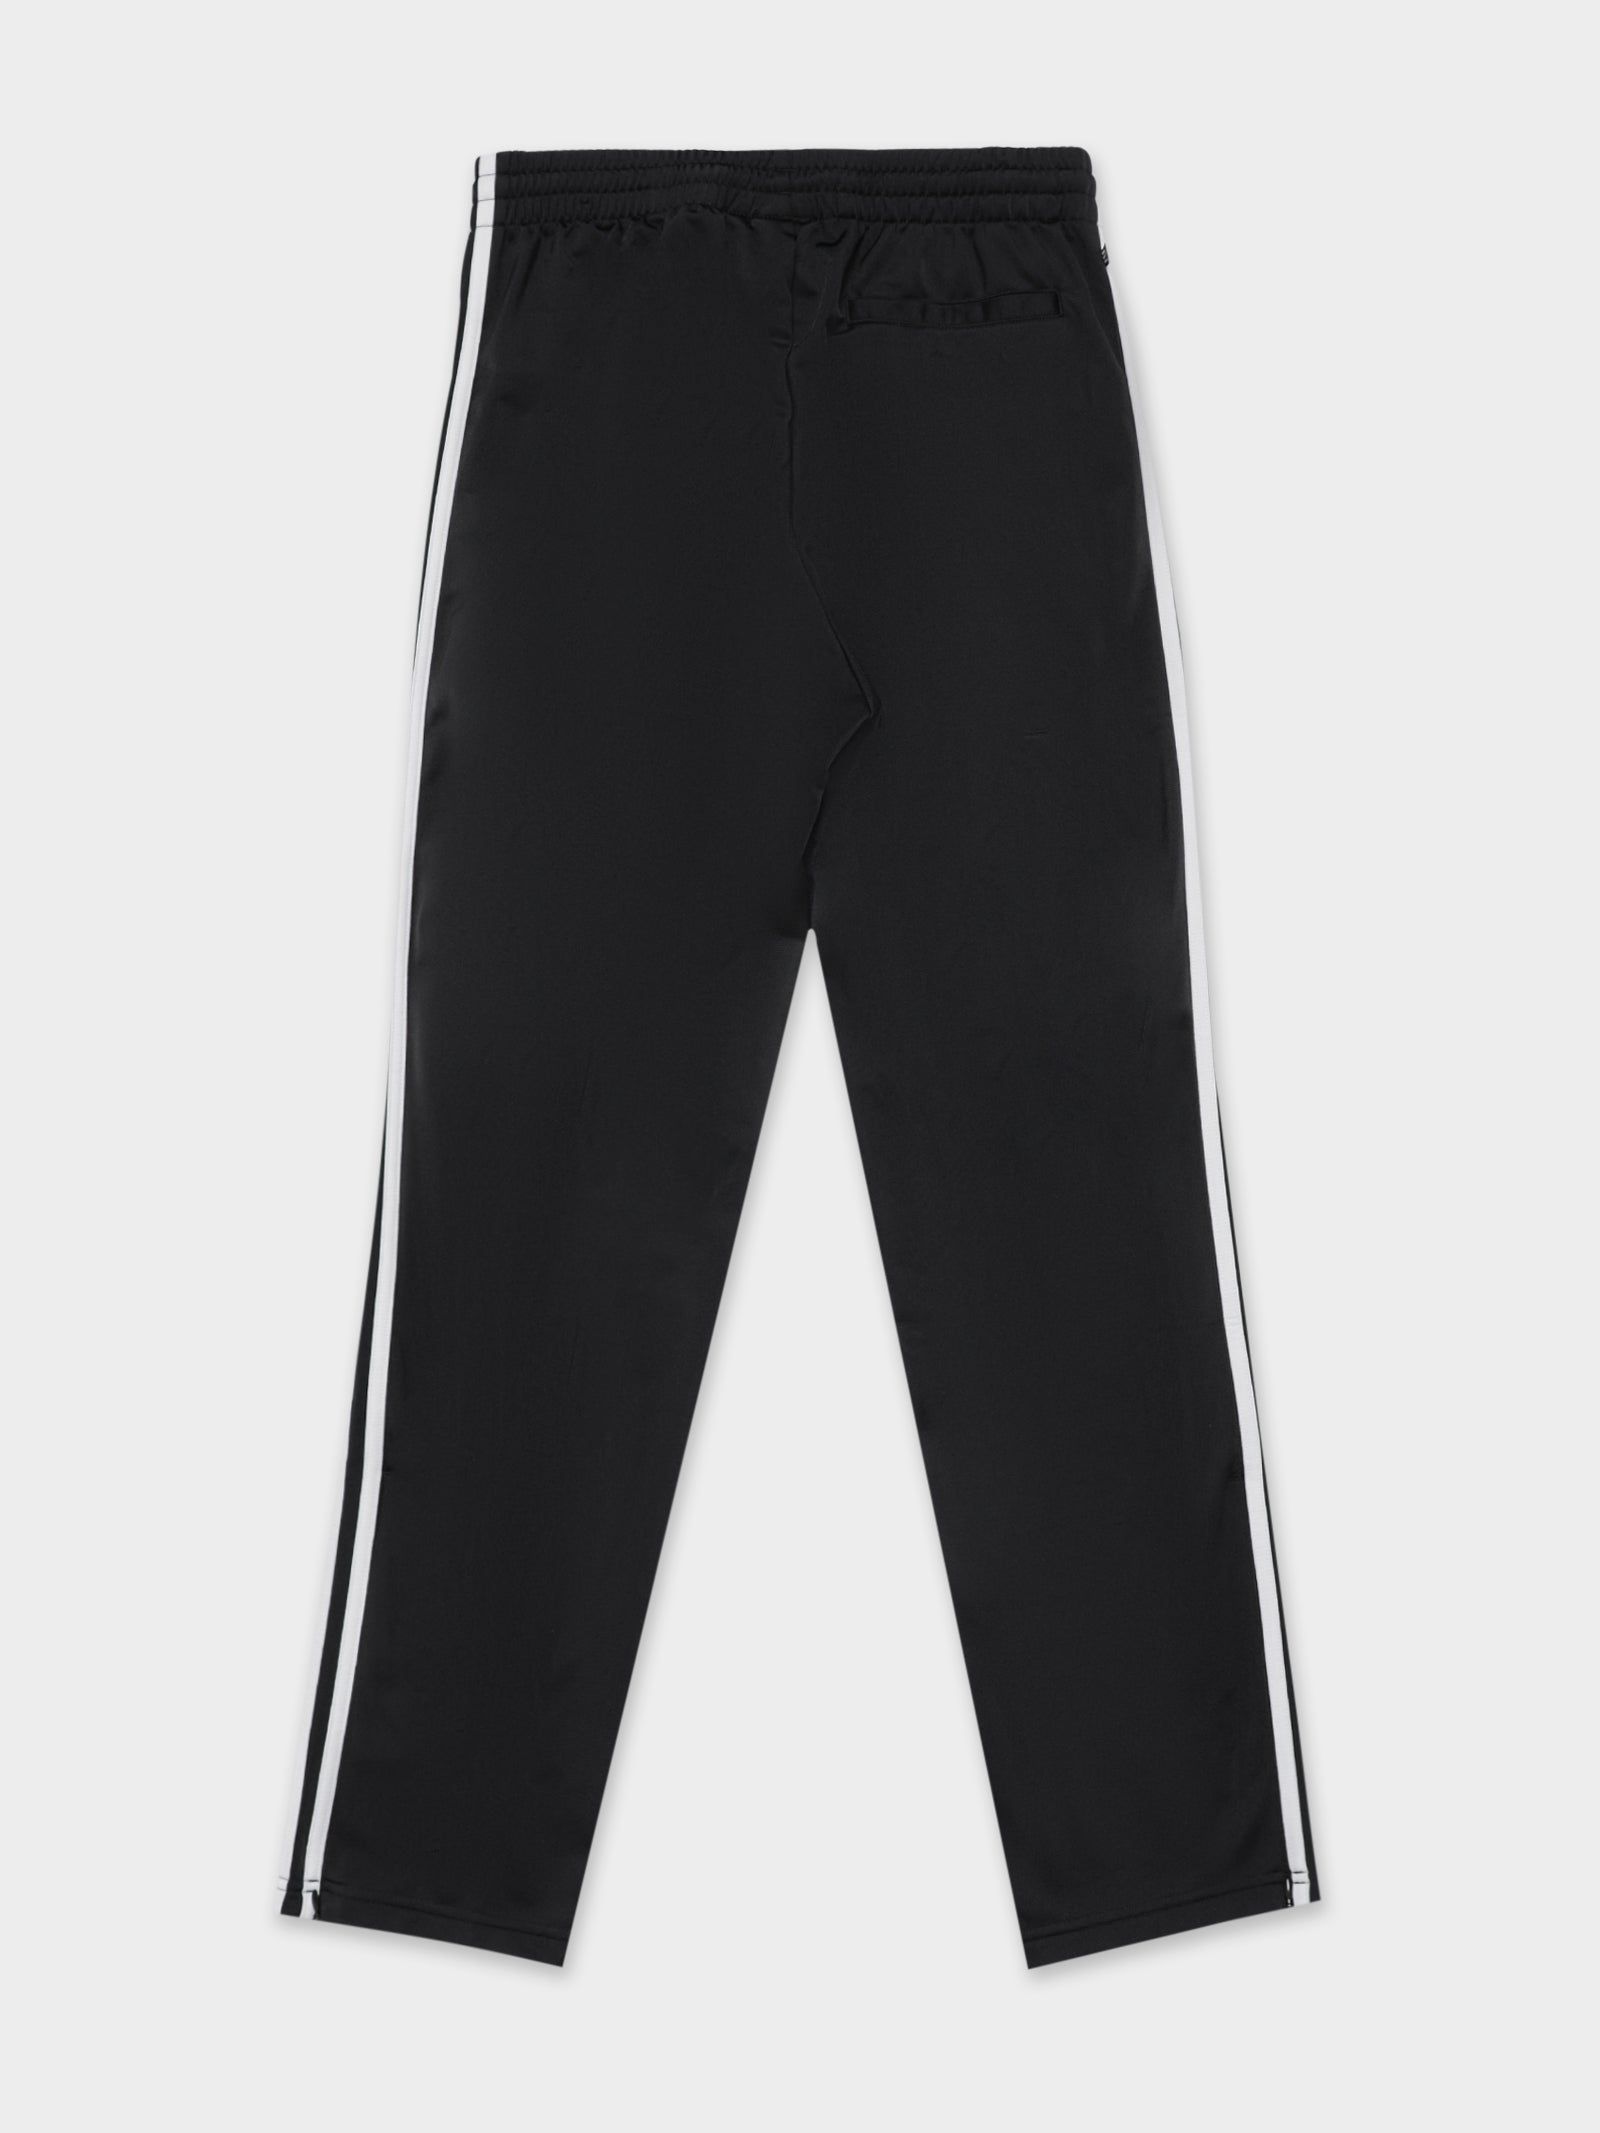 Adicolor Classics Firebird Track Pants in Black